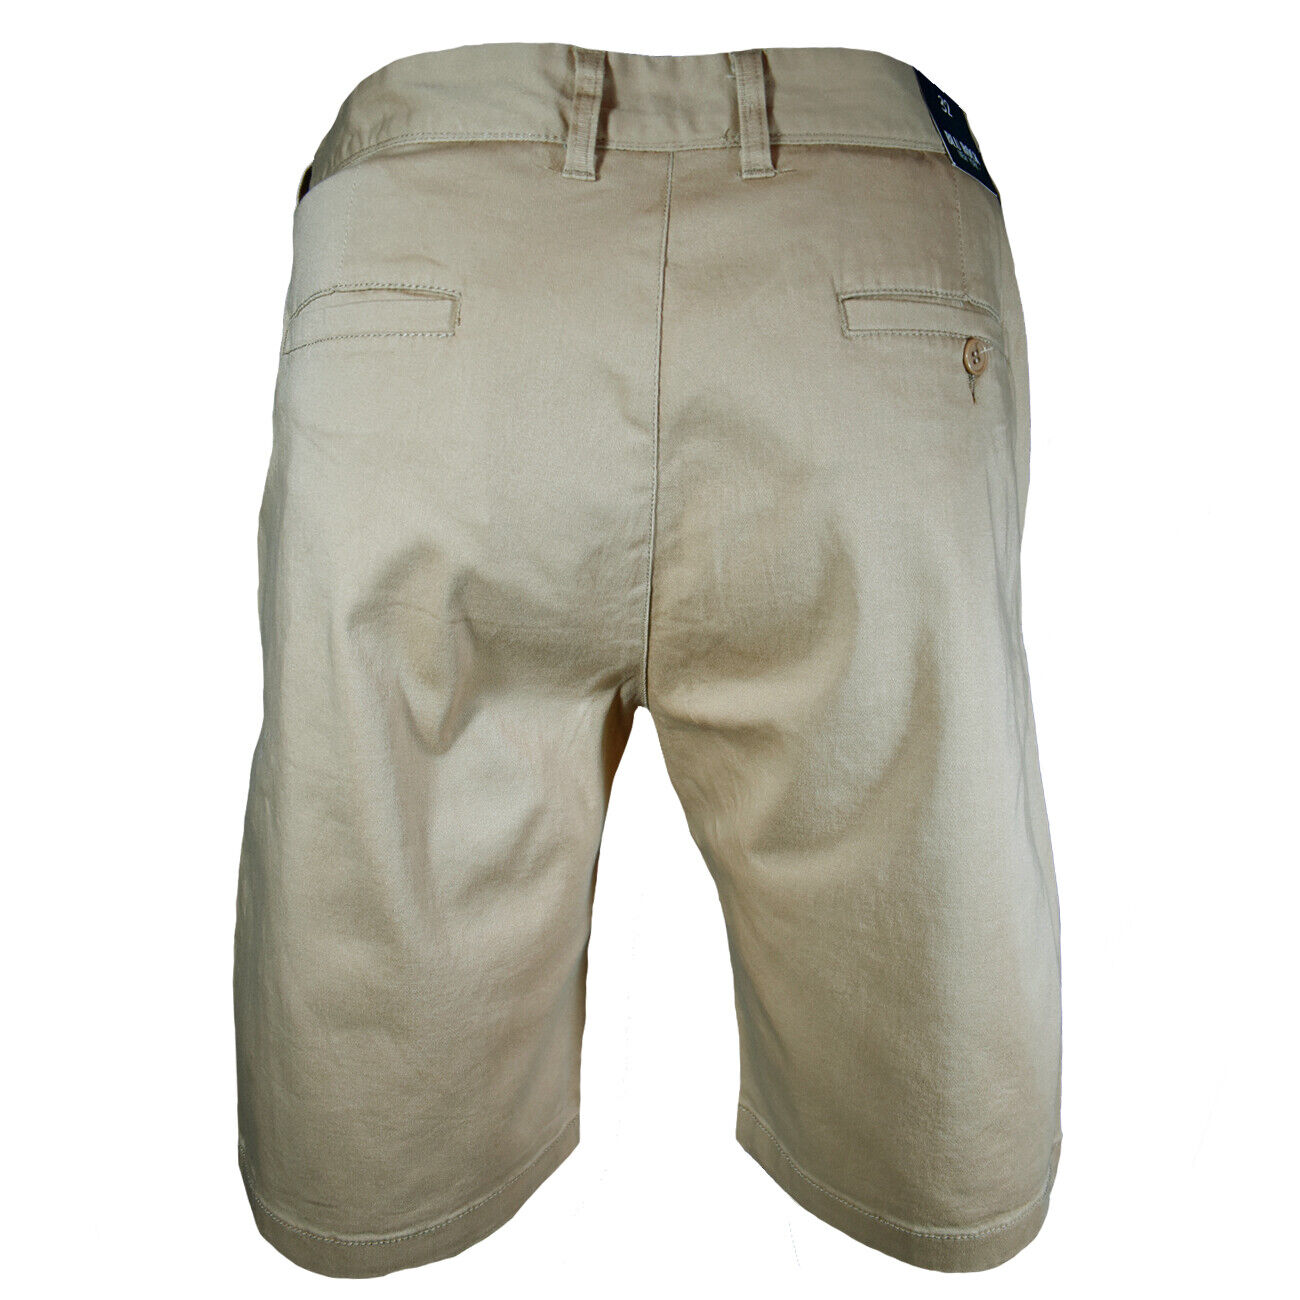 Blu Rock Flex Fit Shorts - Khaki 5 Pockets - Men's